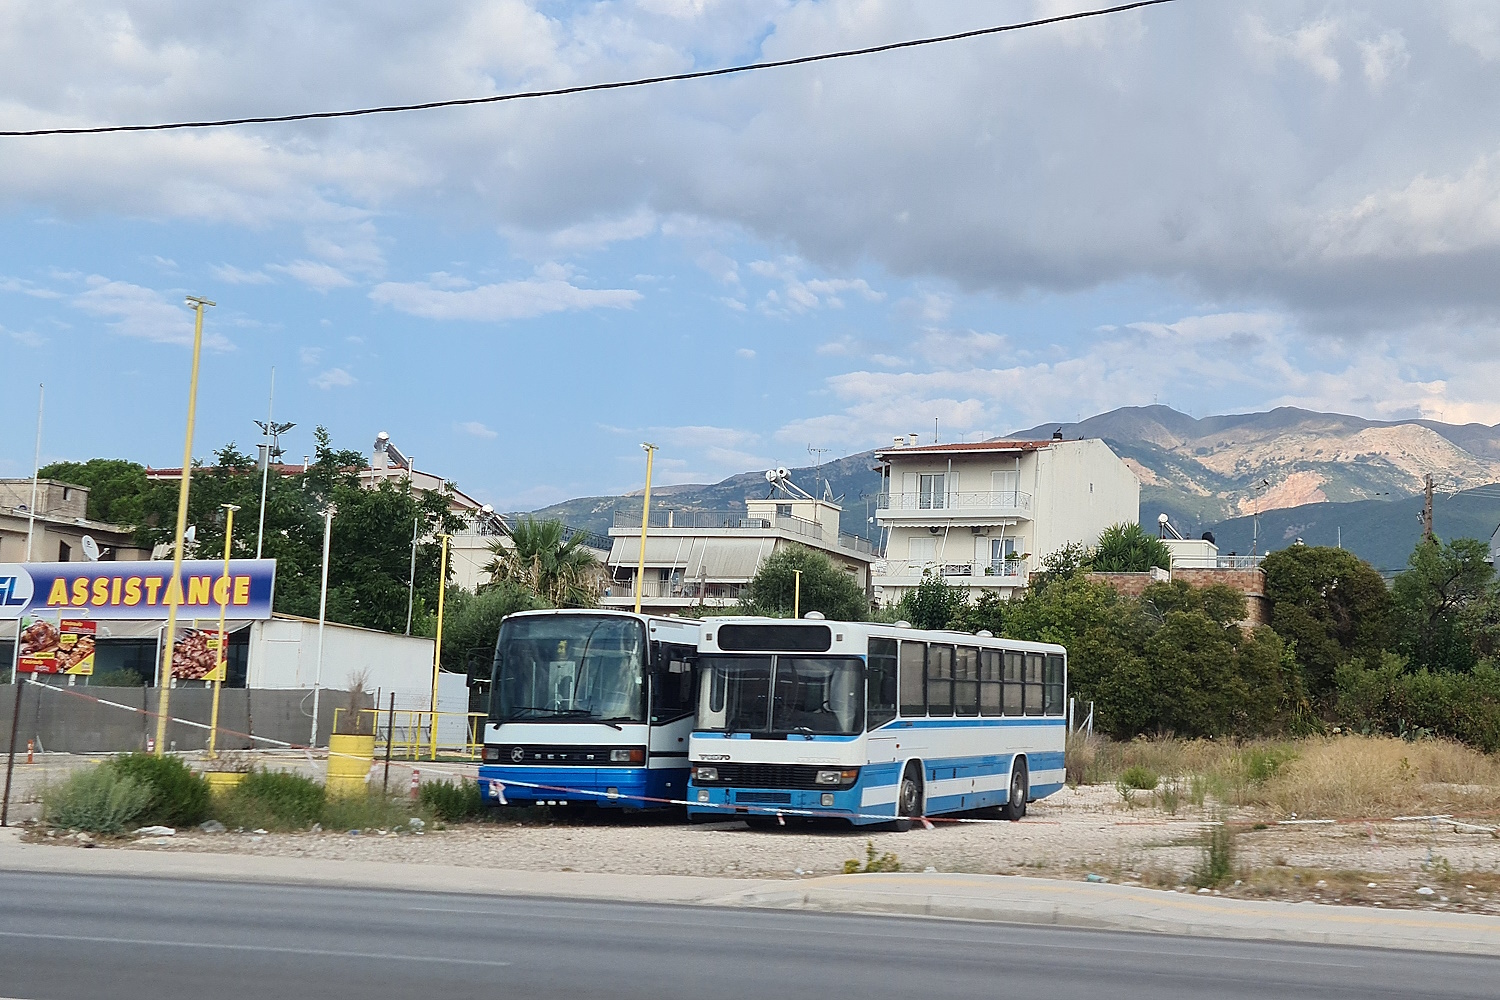 Patras, Saracakis A652 Alexandros № 75; Patras, Setra S215SL № 66